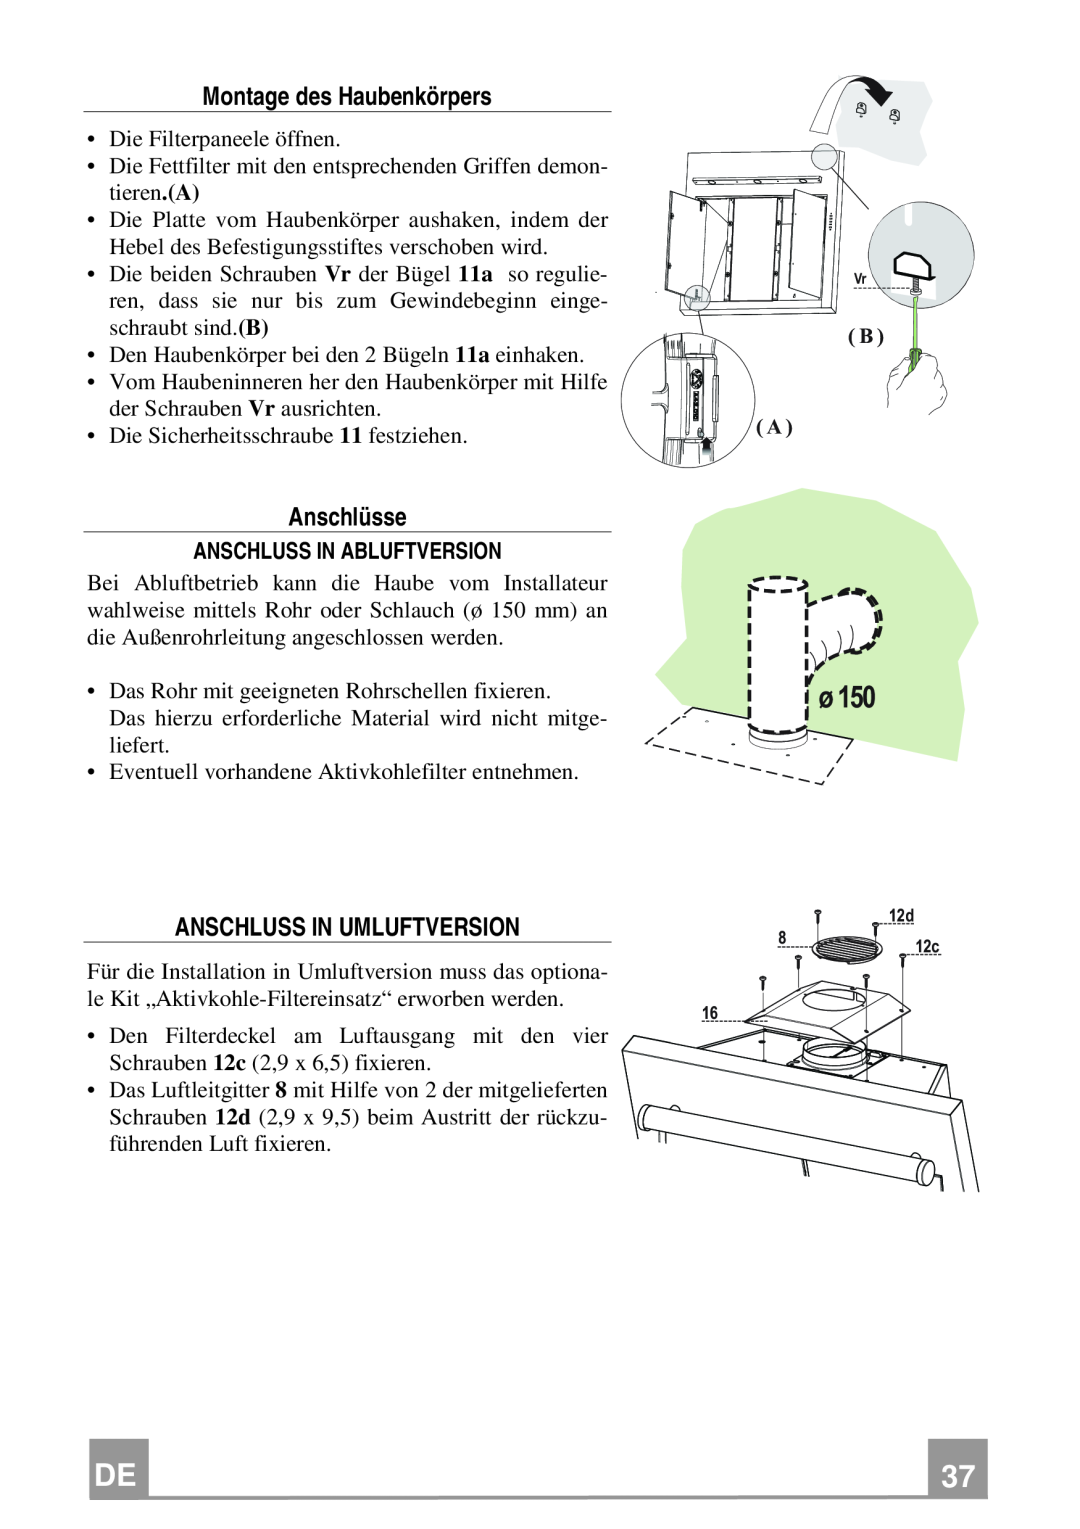 Franke Consumer Products FQD 907 manual Montage des Haubenkörpers, Anschlüsse, Anschluss In Umluftversion 